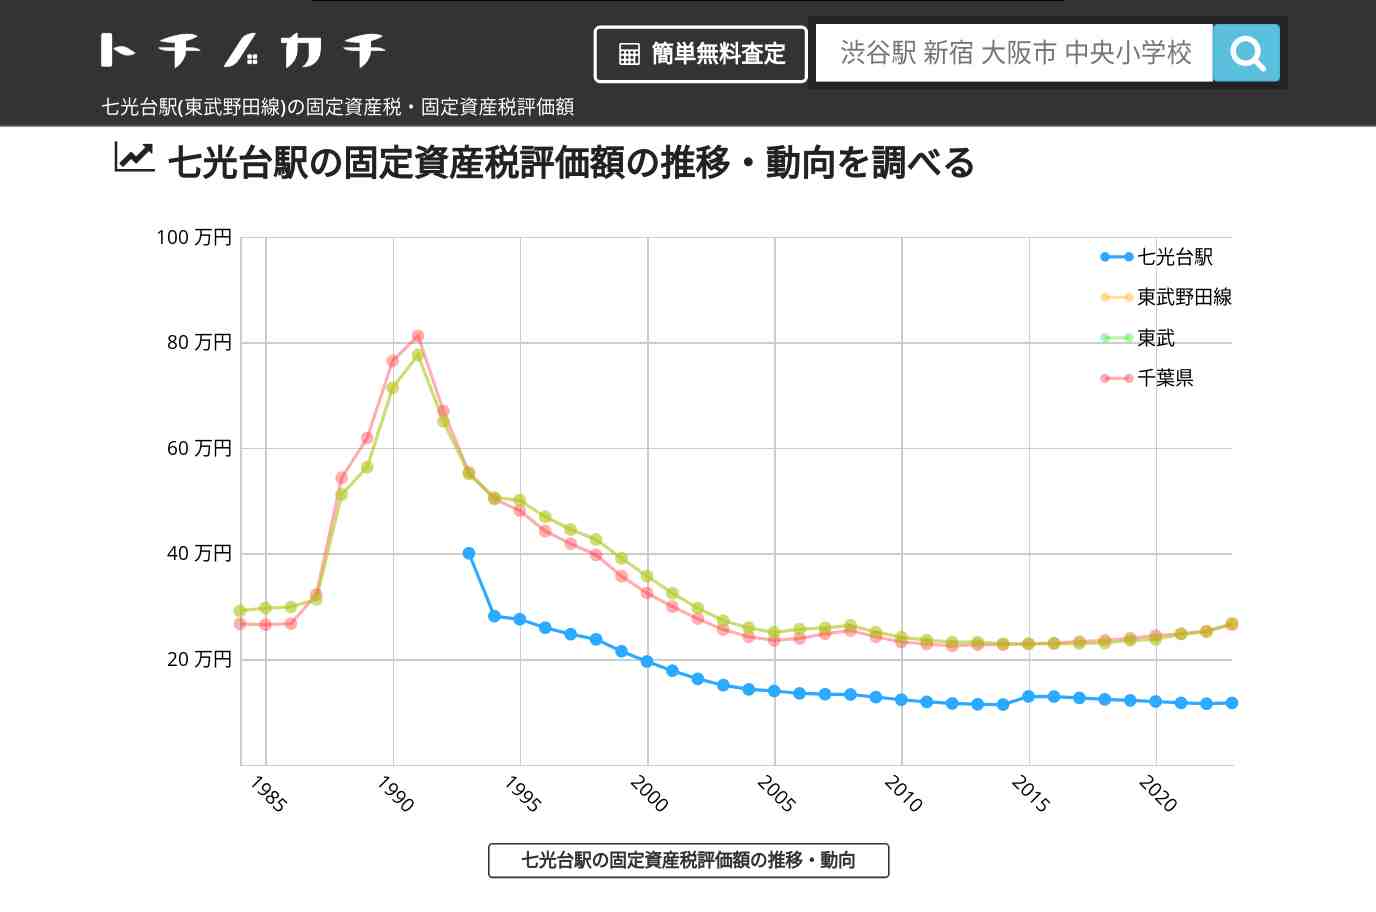 七光台駅(東武野田線)の固定資産税・固定資産税評価額 | トチノカチ